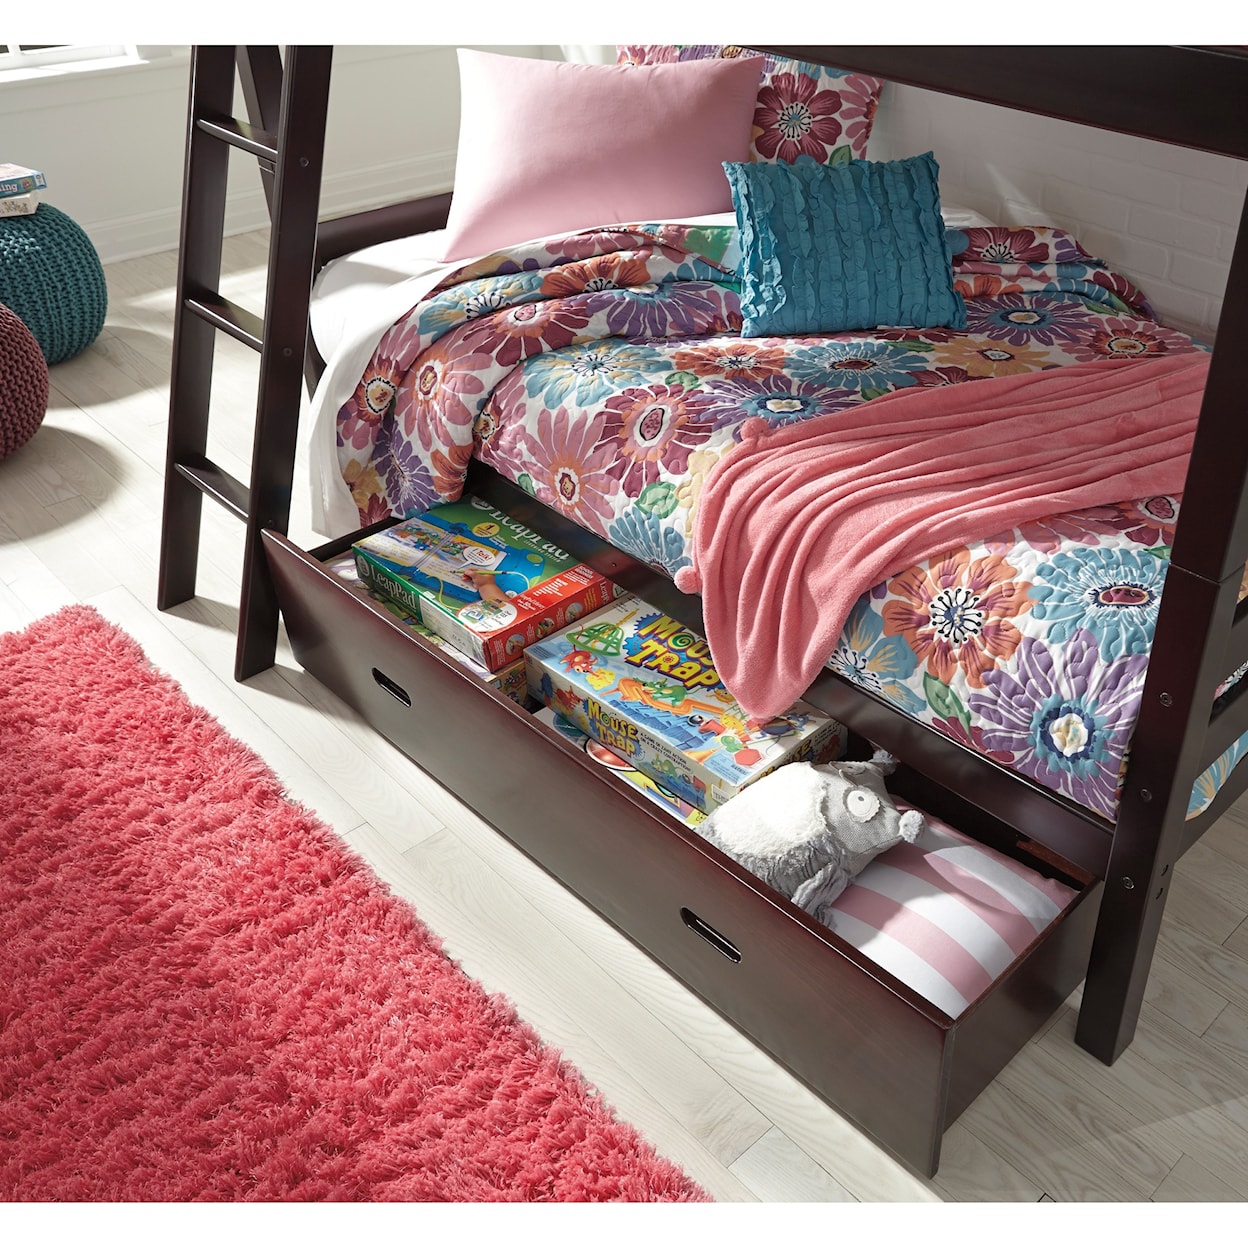 Ashley Furniture Signature Design Halanton Twin/Twin Bunk Bed w/ Under Bed Storage